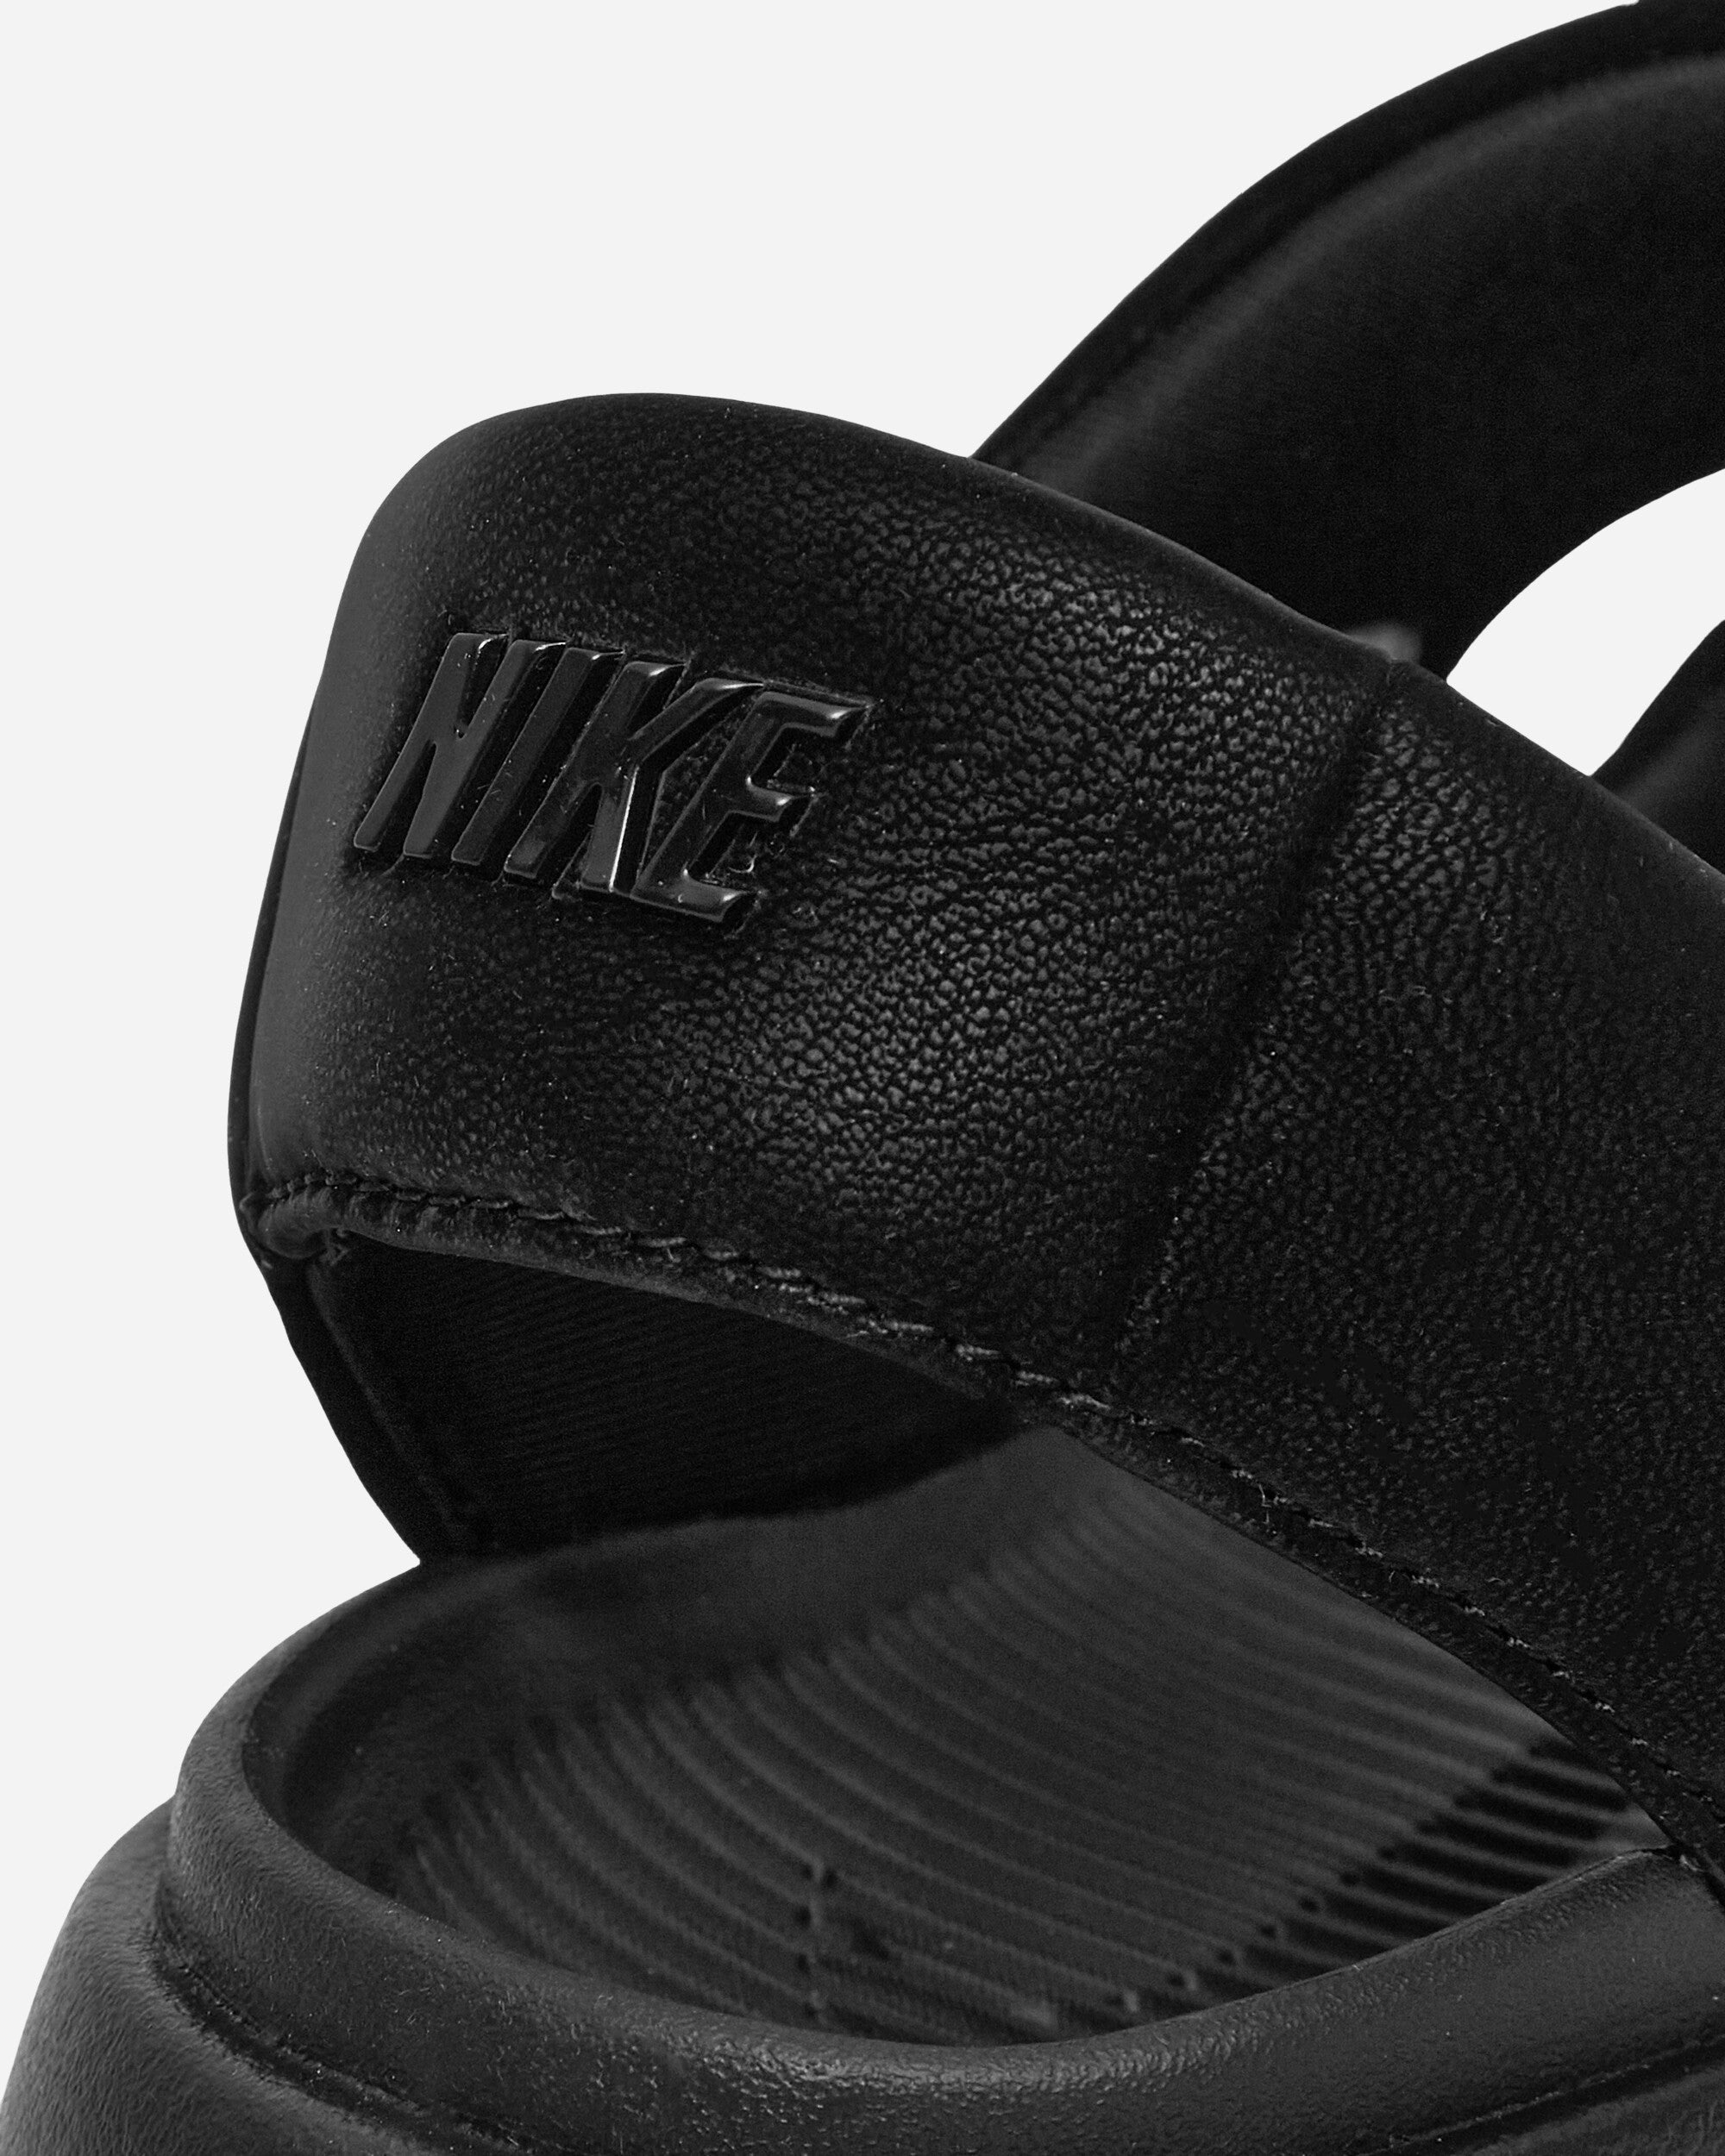 Nike Wmns Nike Calm Sandal Black/Black Sneakers Low FJ6043-001